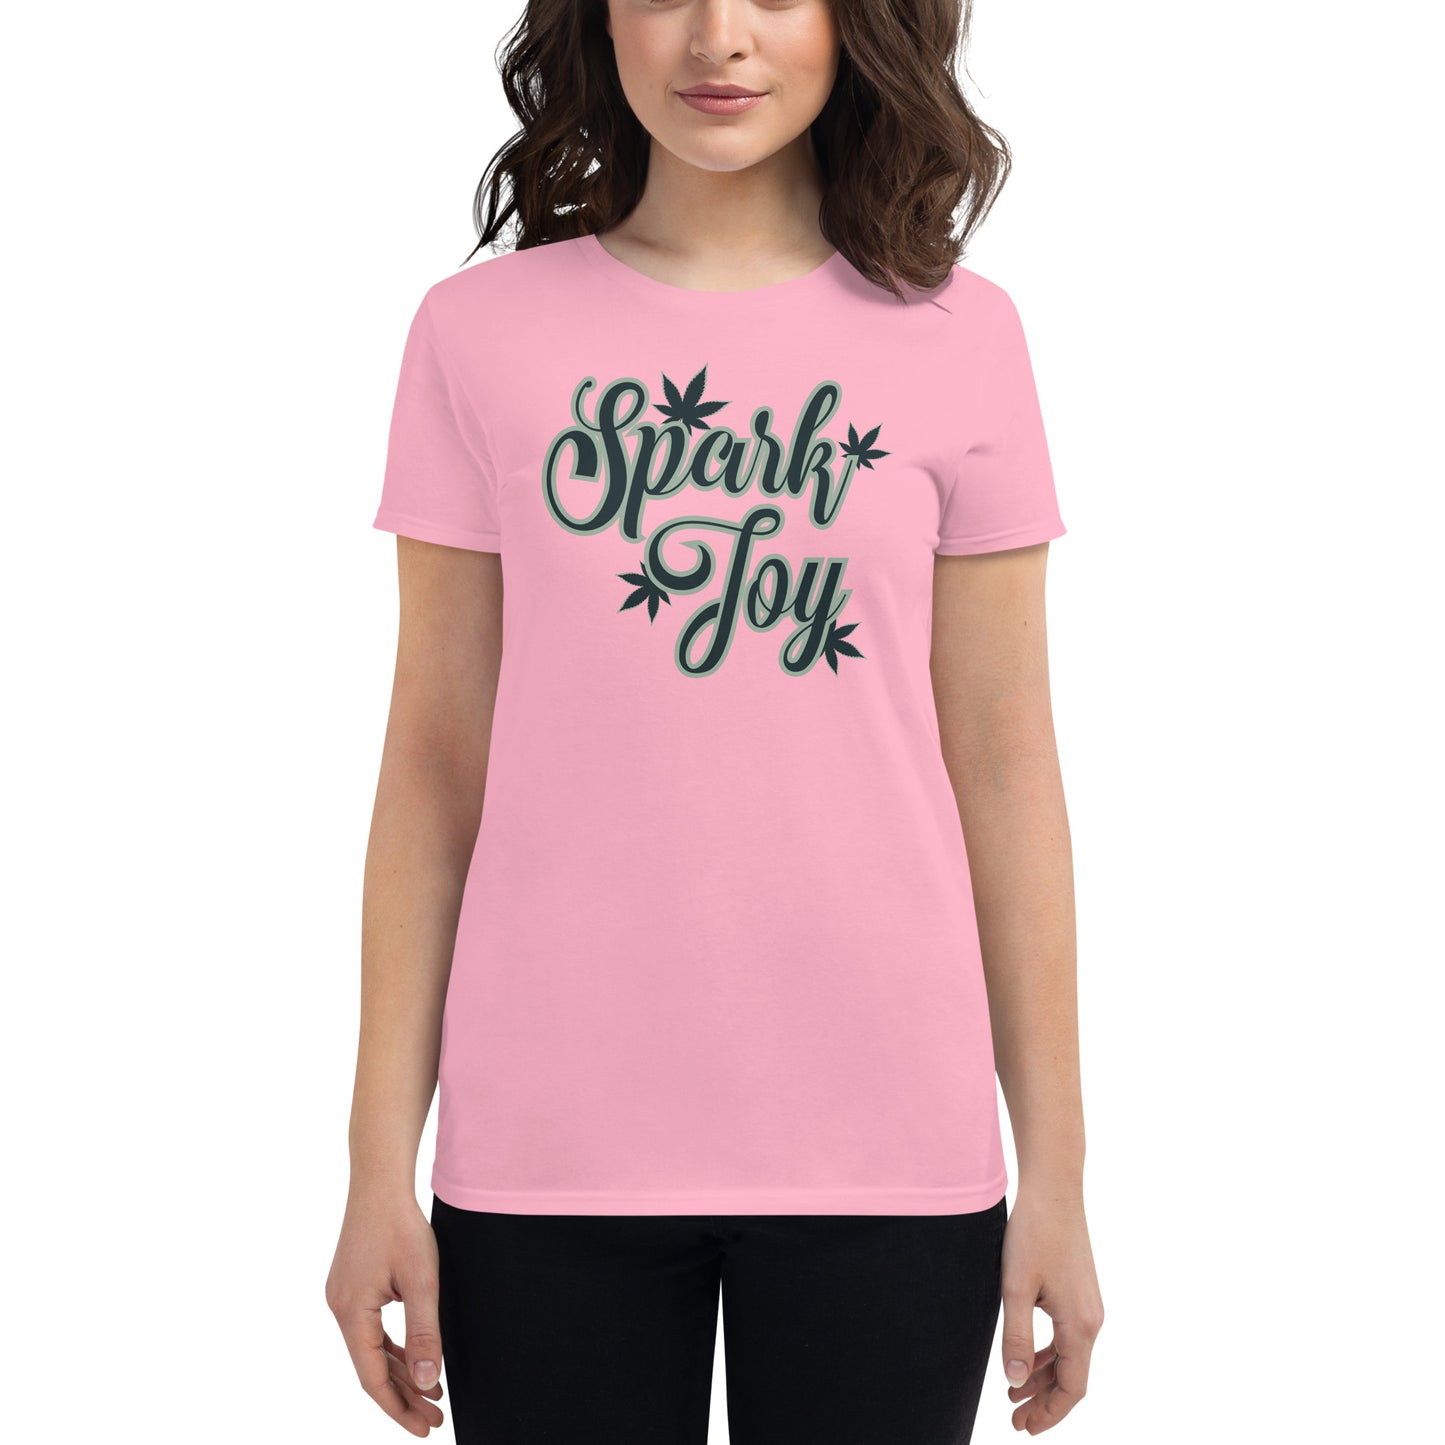 Spark Joy Women's Short Sleeve T-shirt